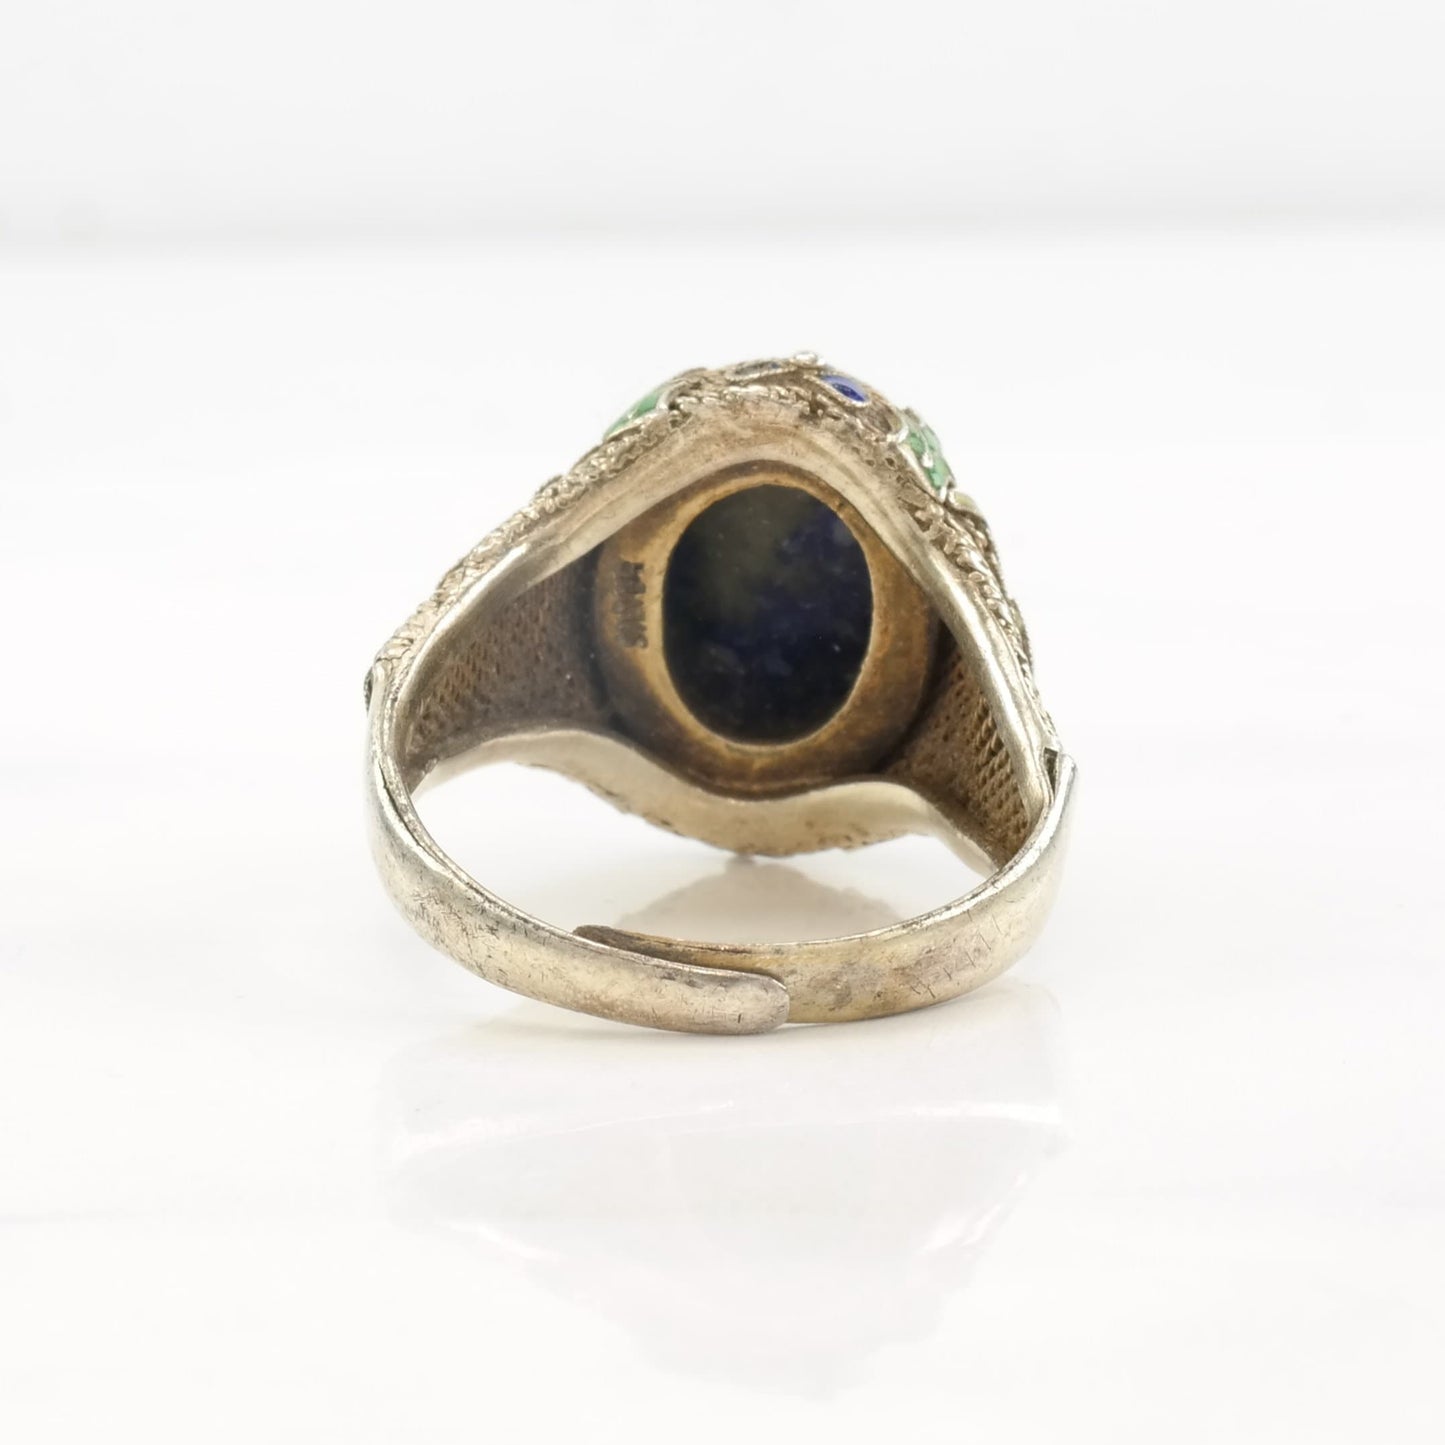 Antique Chinese Ring Lapis Lazuli Enamel, Chicken, Filigree Sterling Silver Size 9 - 9 1/2